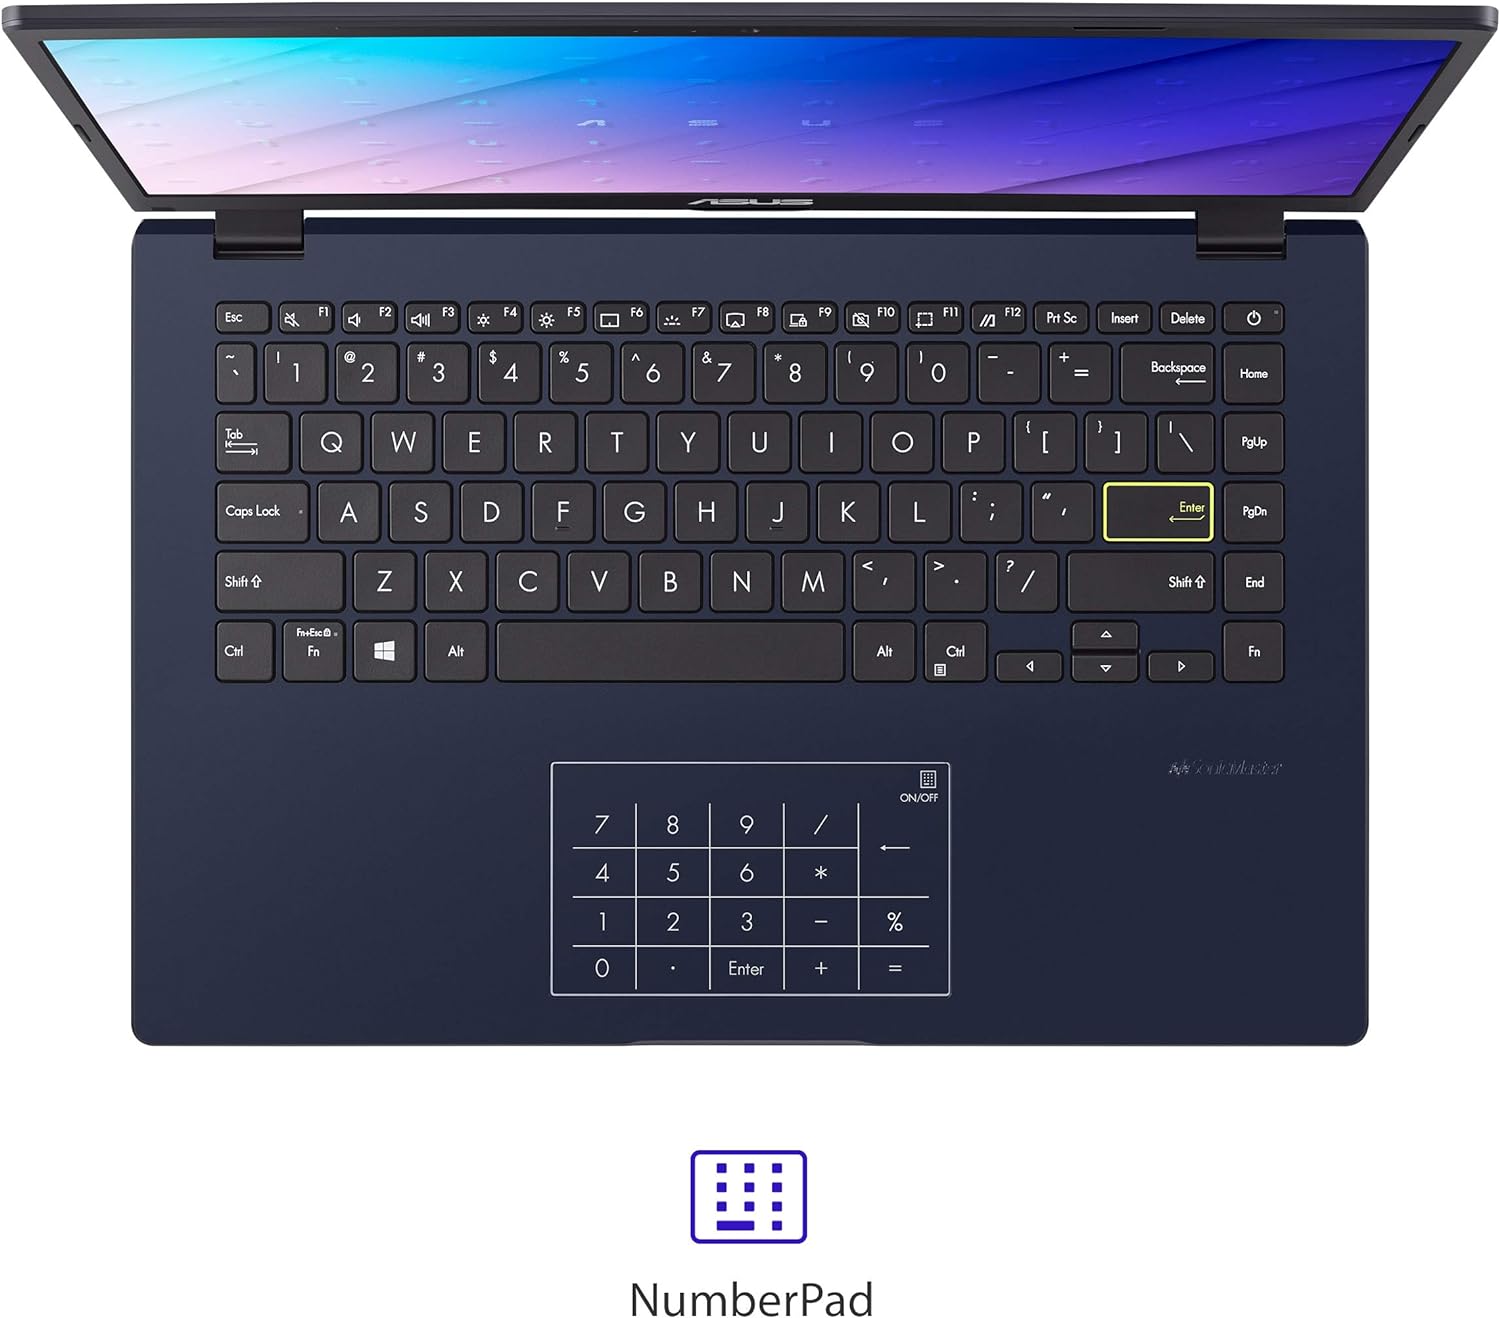 ASUS0 Vivobook Go 14 L410 Ultra Thin Laptop, 14” FHD Display, Intel Celeron N4020 Processor, 4GB RAM, 64GB eMMC, NumberPad, Windows 11 Home in S Mode, 1 Year Microsoft 365, Star Black, L410MA-AH02